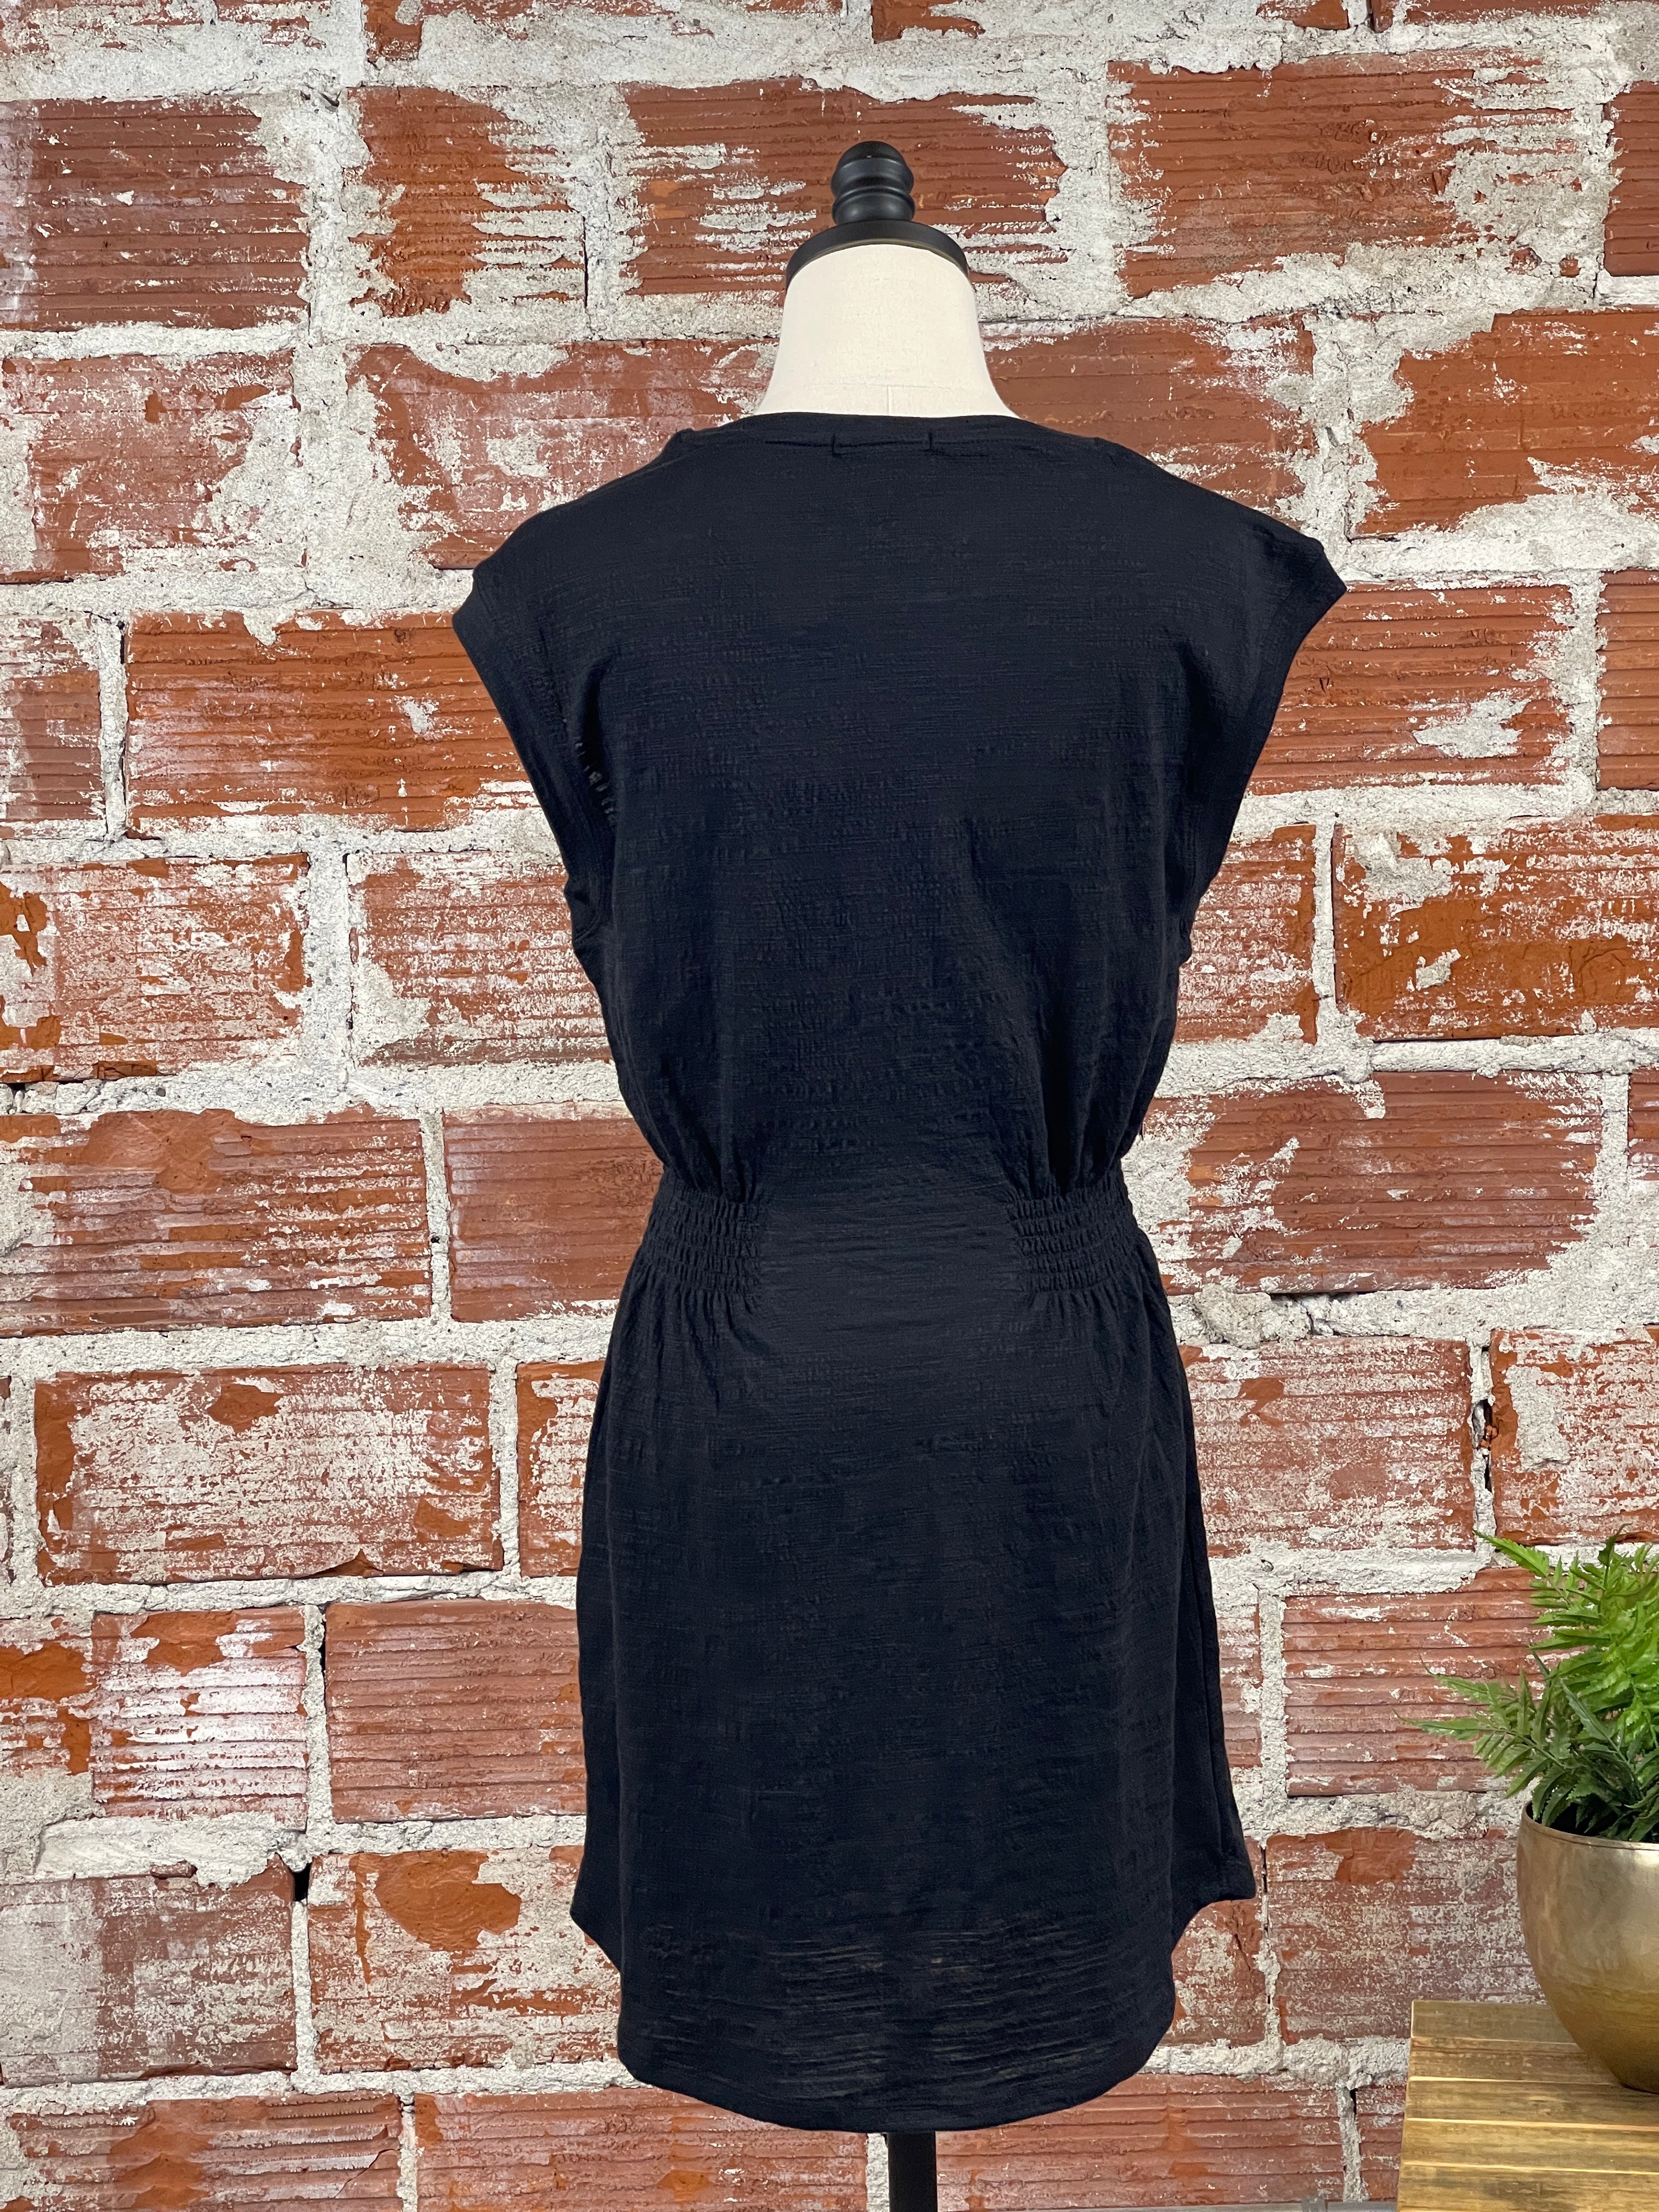 Z Supply Rowan Textured Knit Dress in Black-151 Dresses - Short-Little Bird Boutique